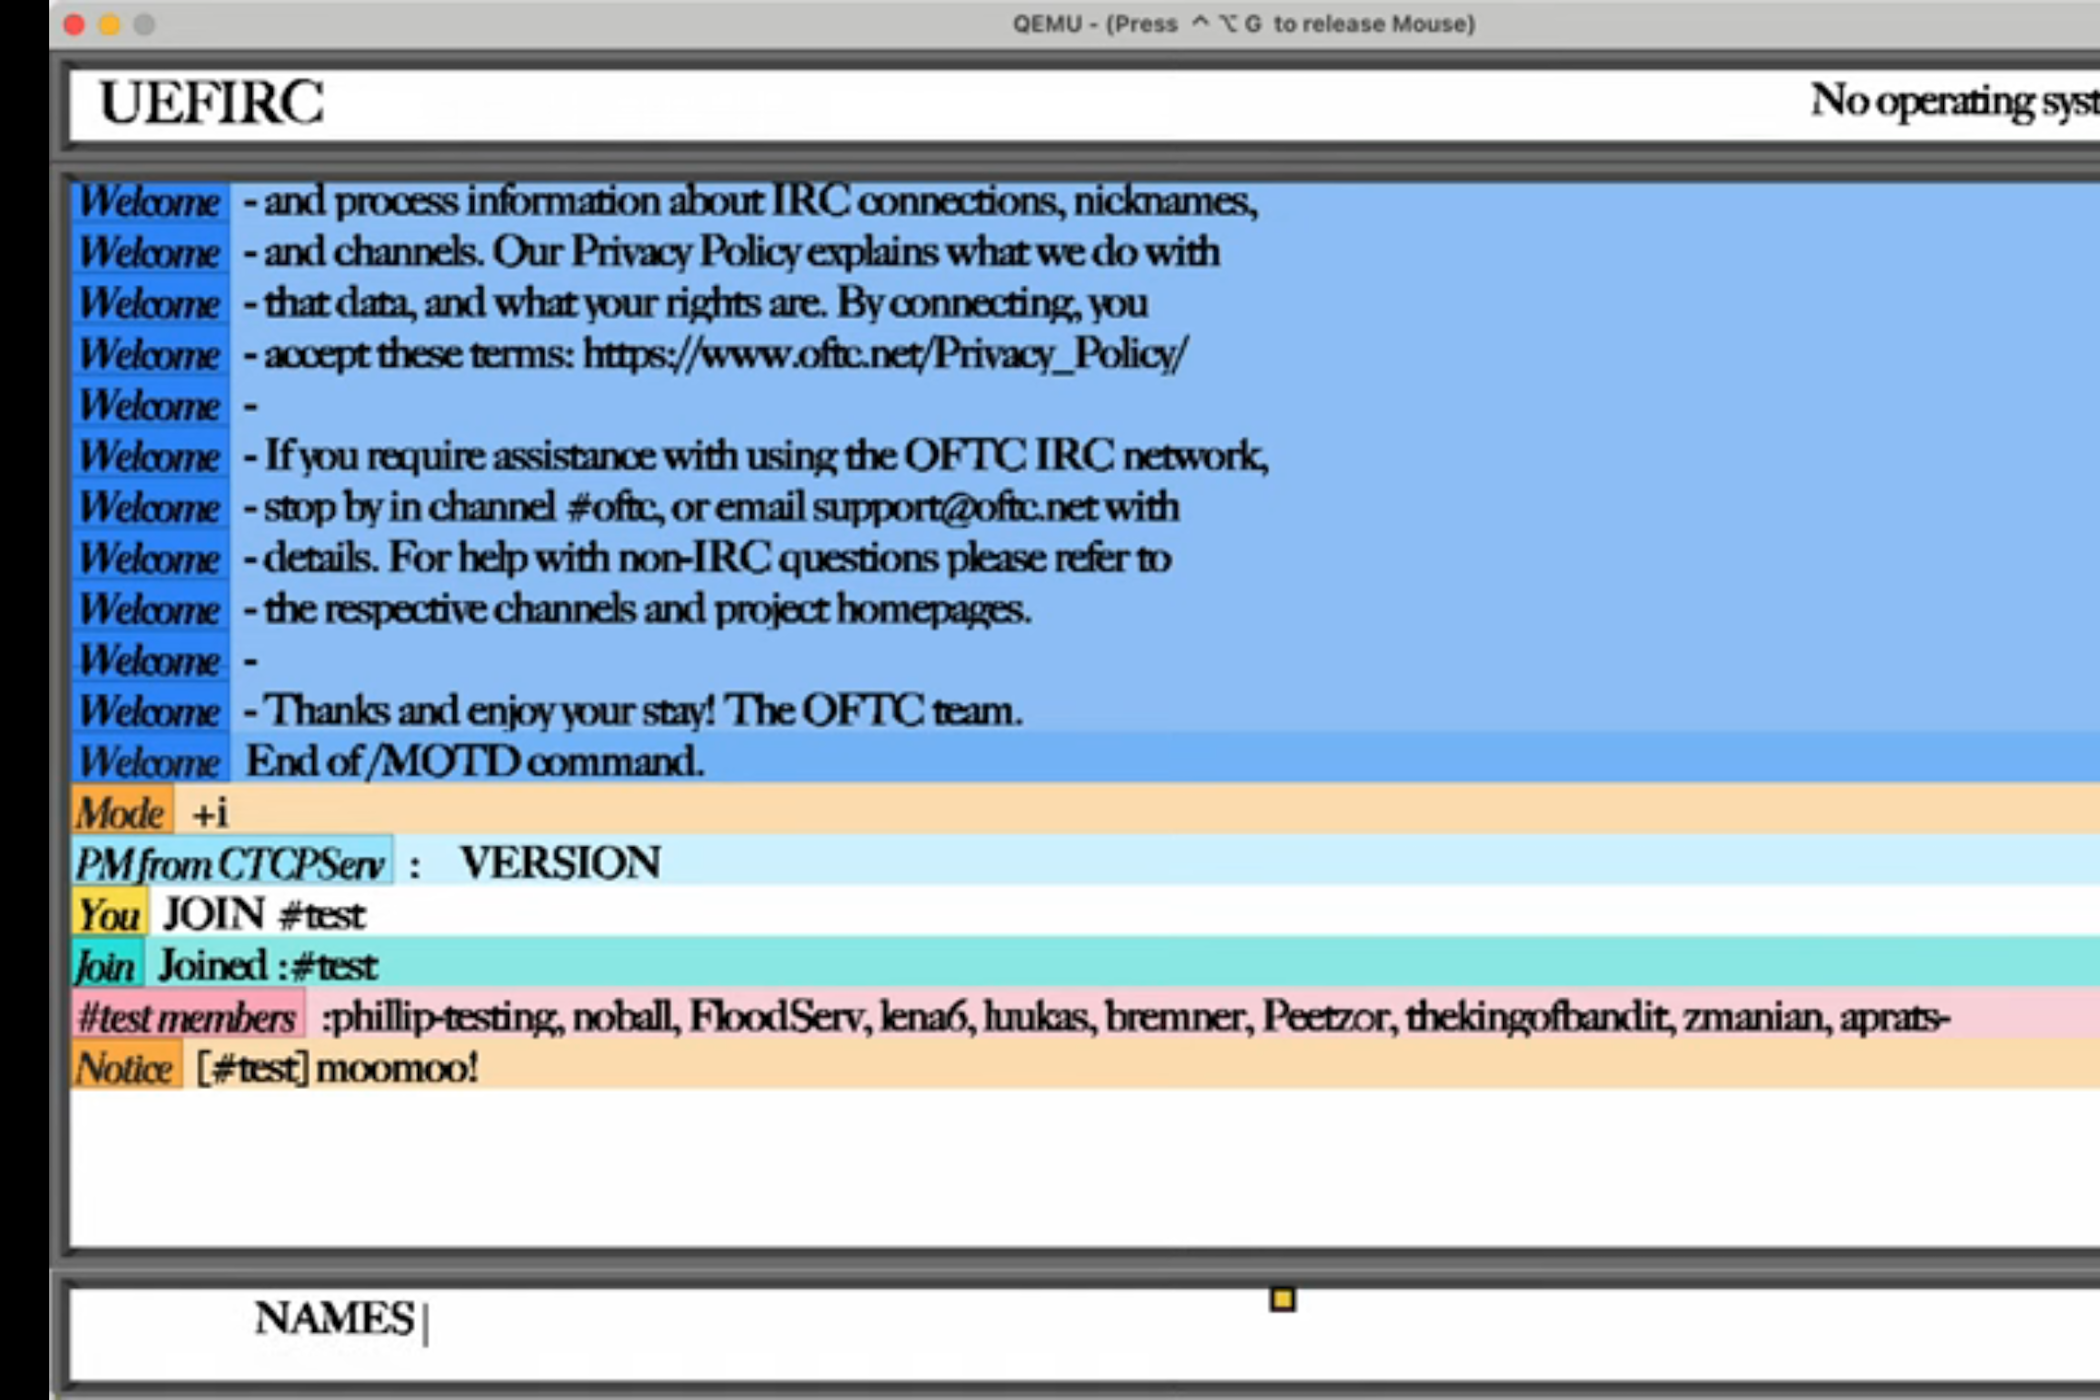 A screenshot of UEFIRC